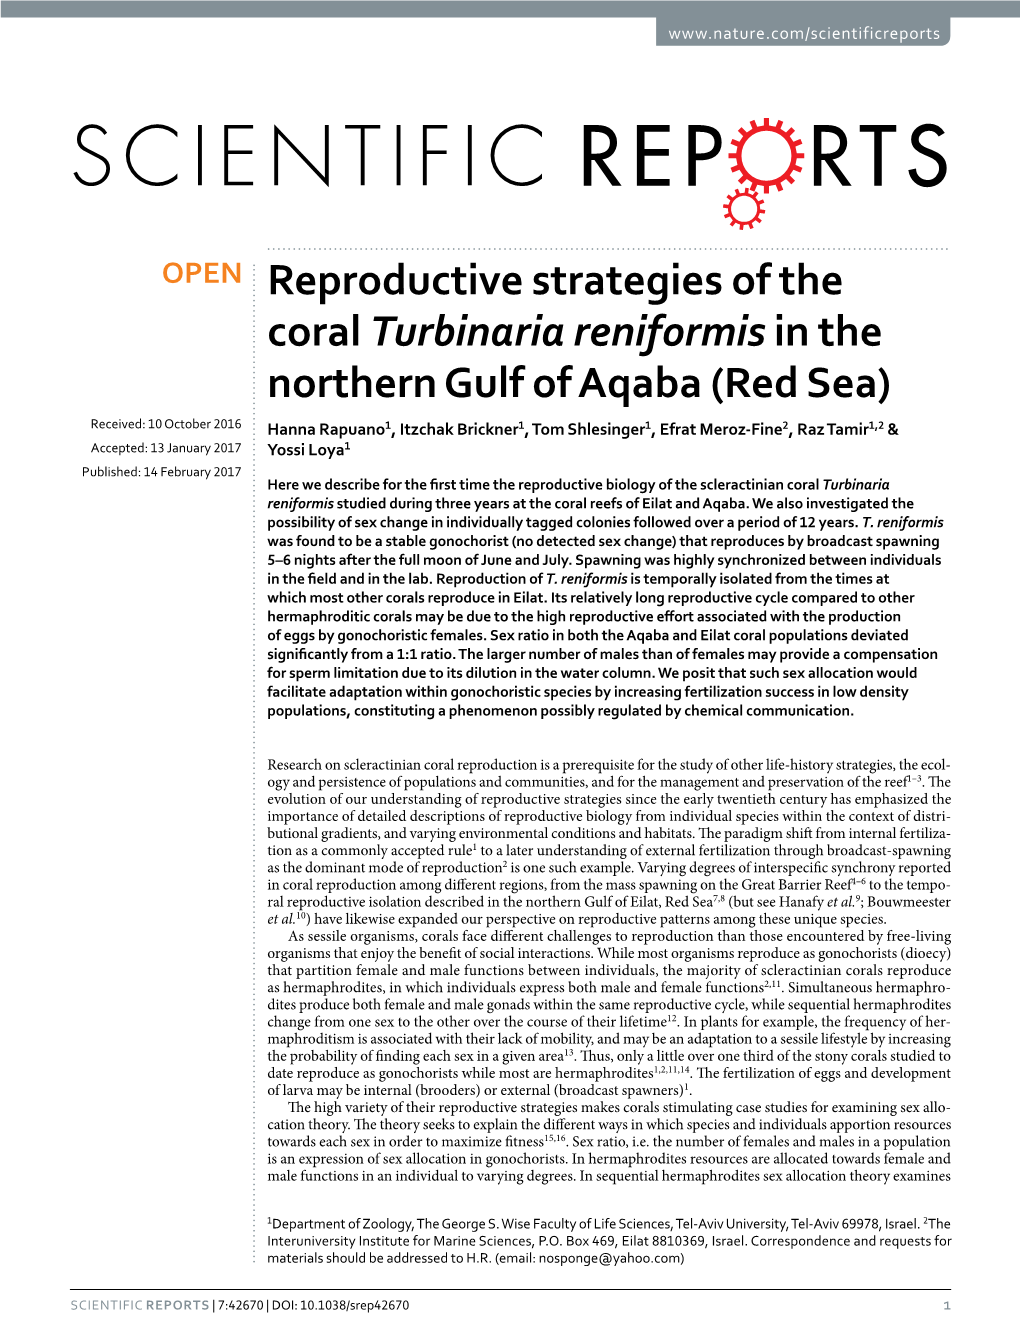 Reproductive Strategies of the Coral Turbinaria Reniformis in The